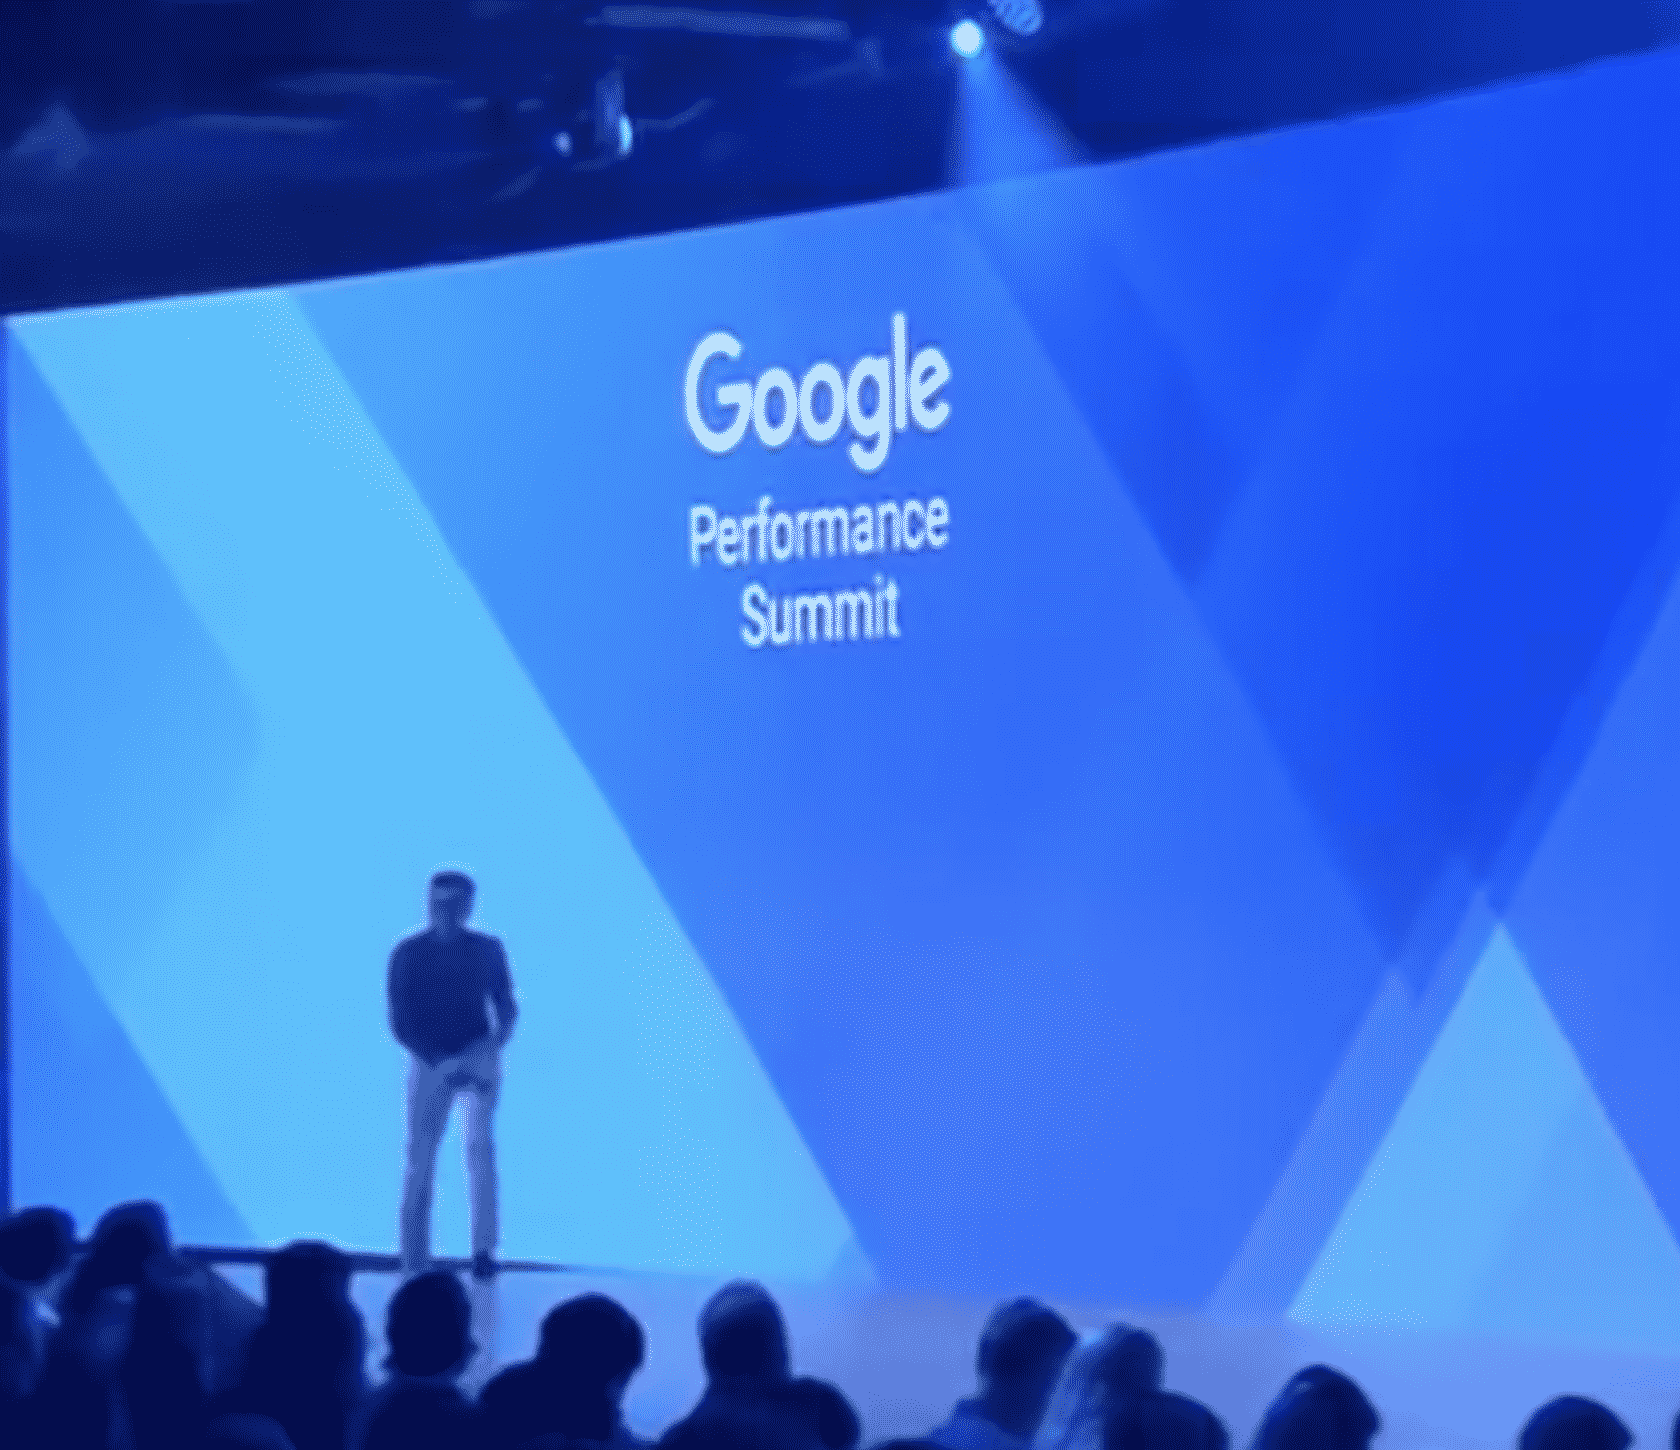 Google performance summit